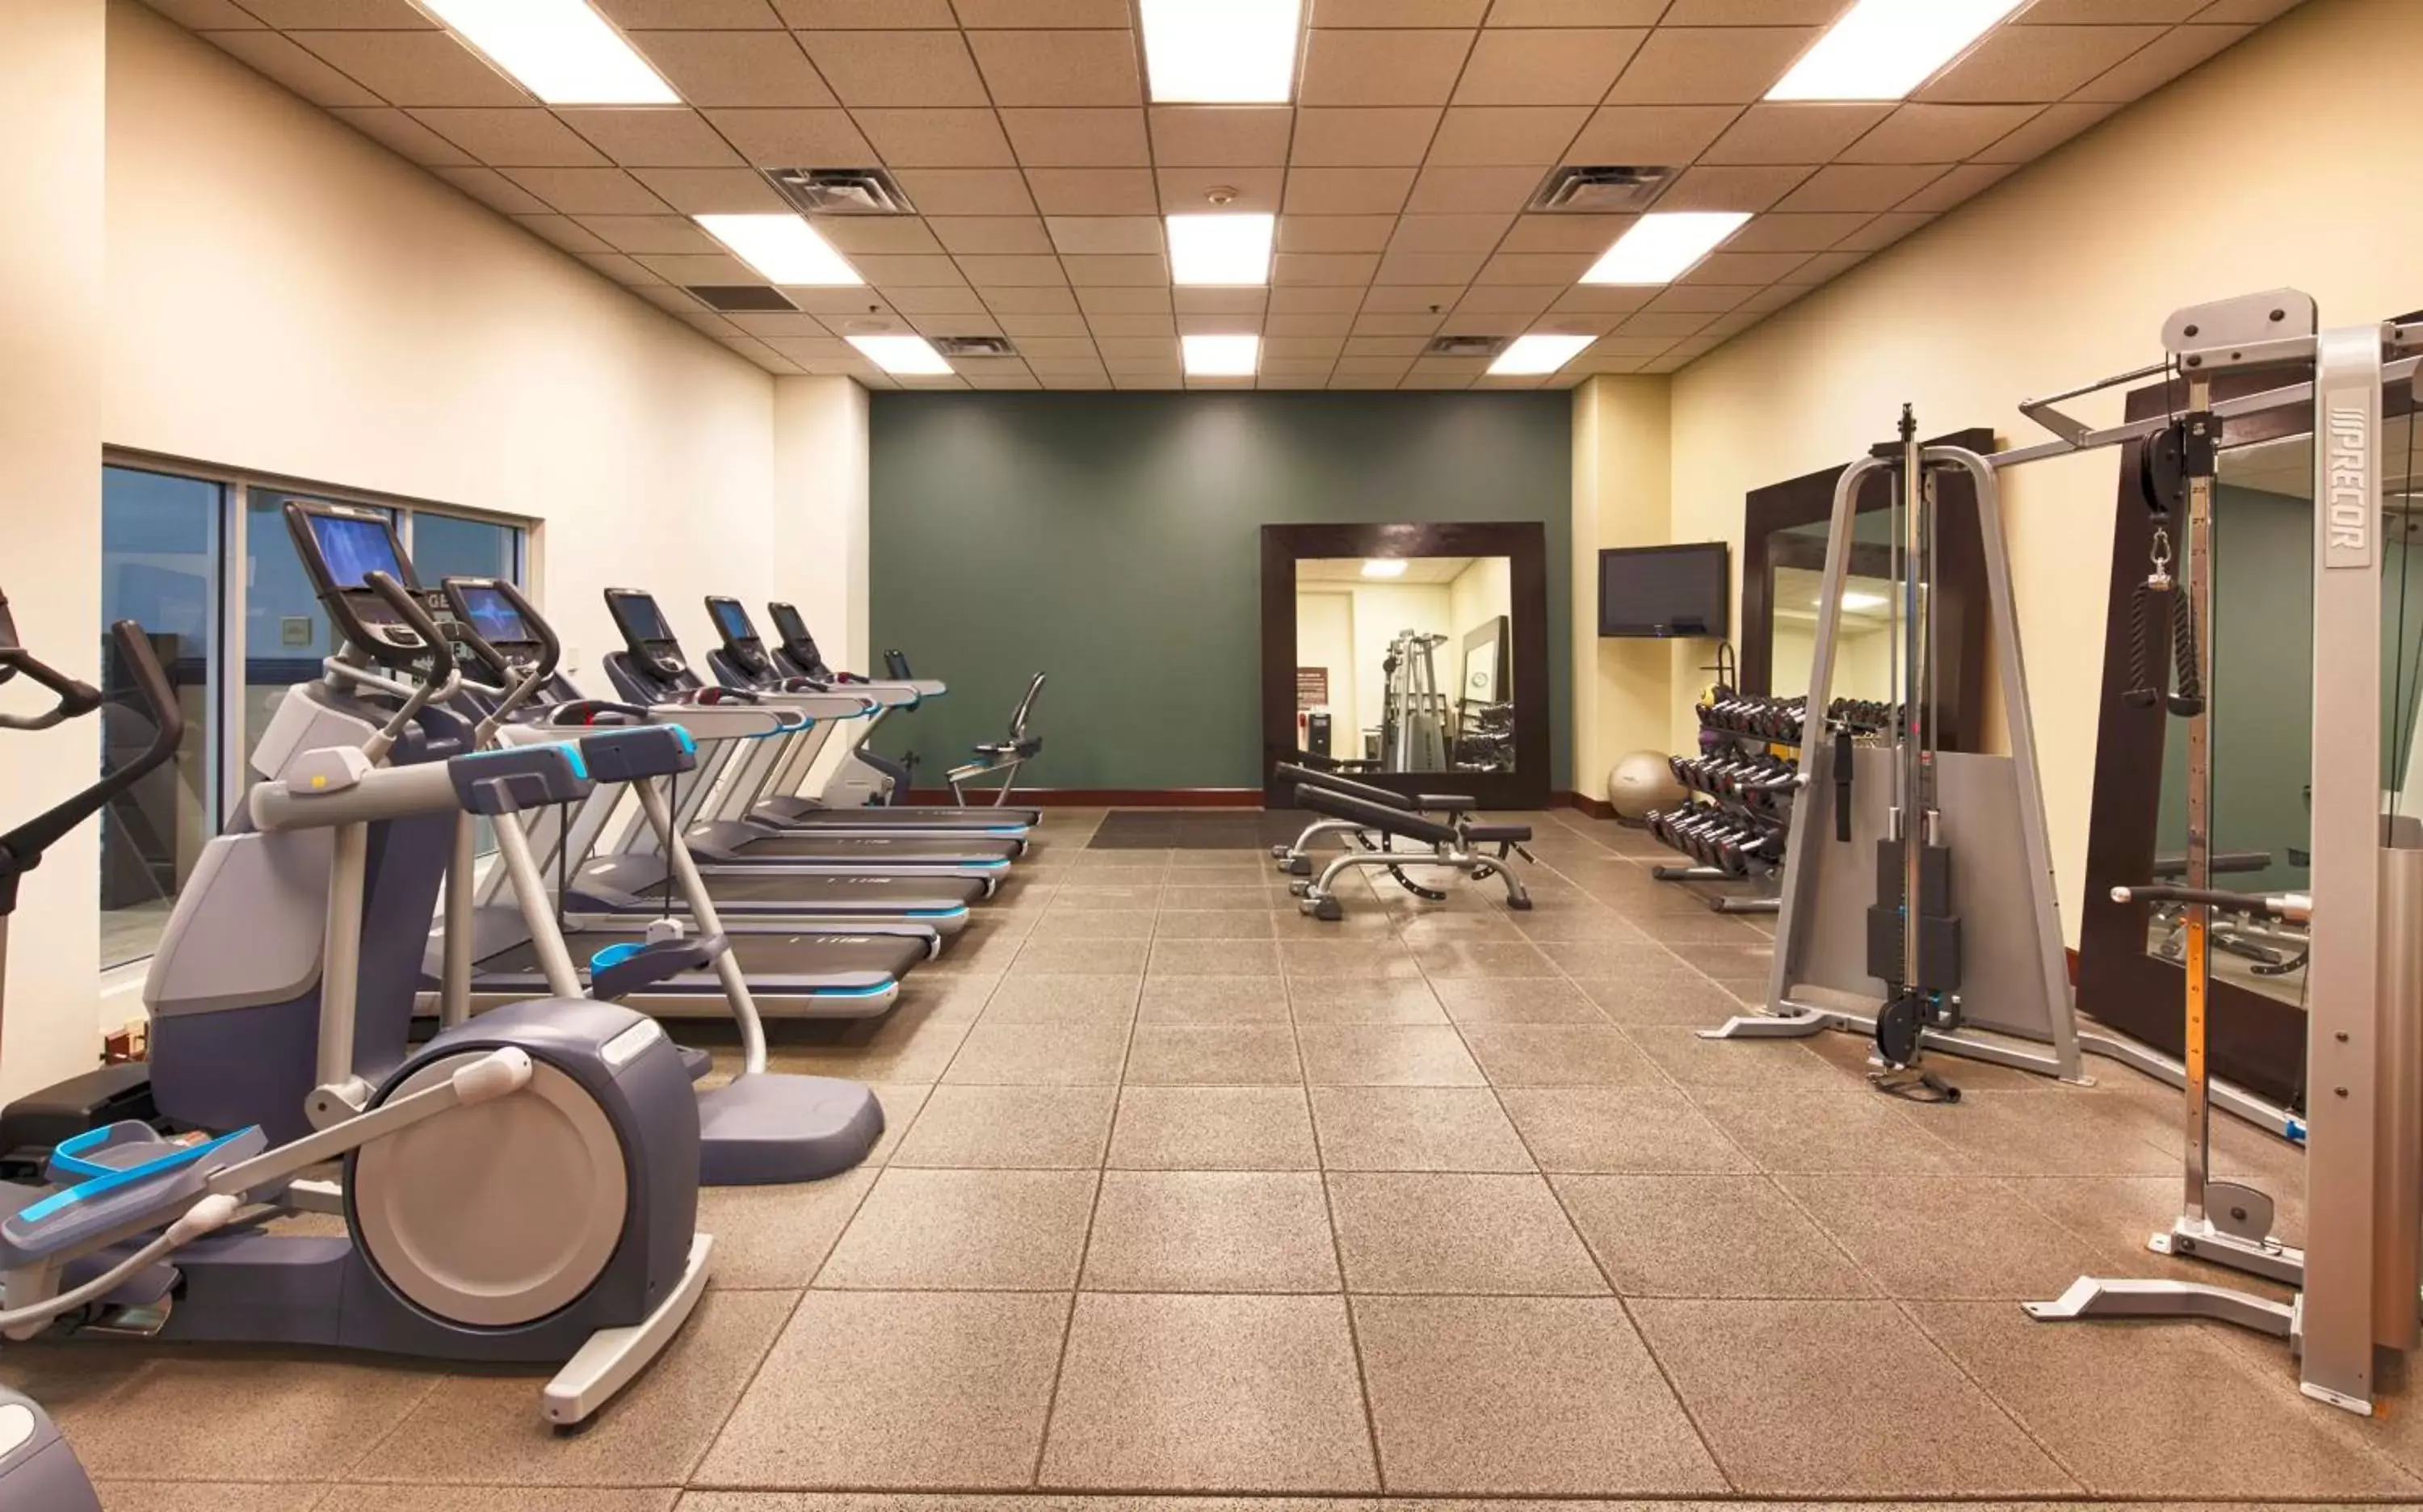 Fitness centre/facilities, Fitness Center/Facilities in Hilton Minneapolis Bloomington